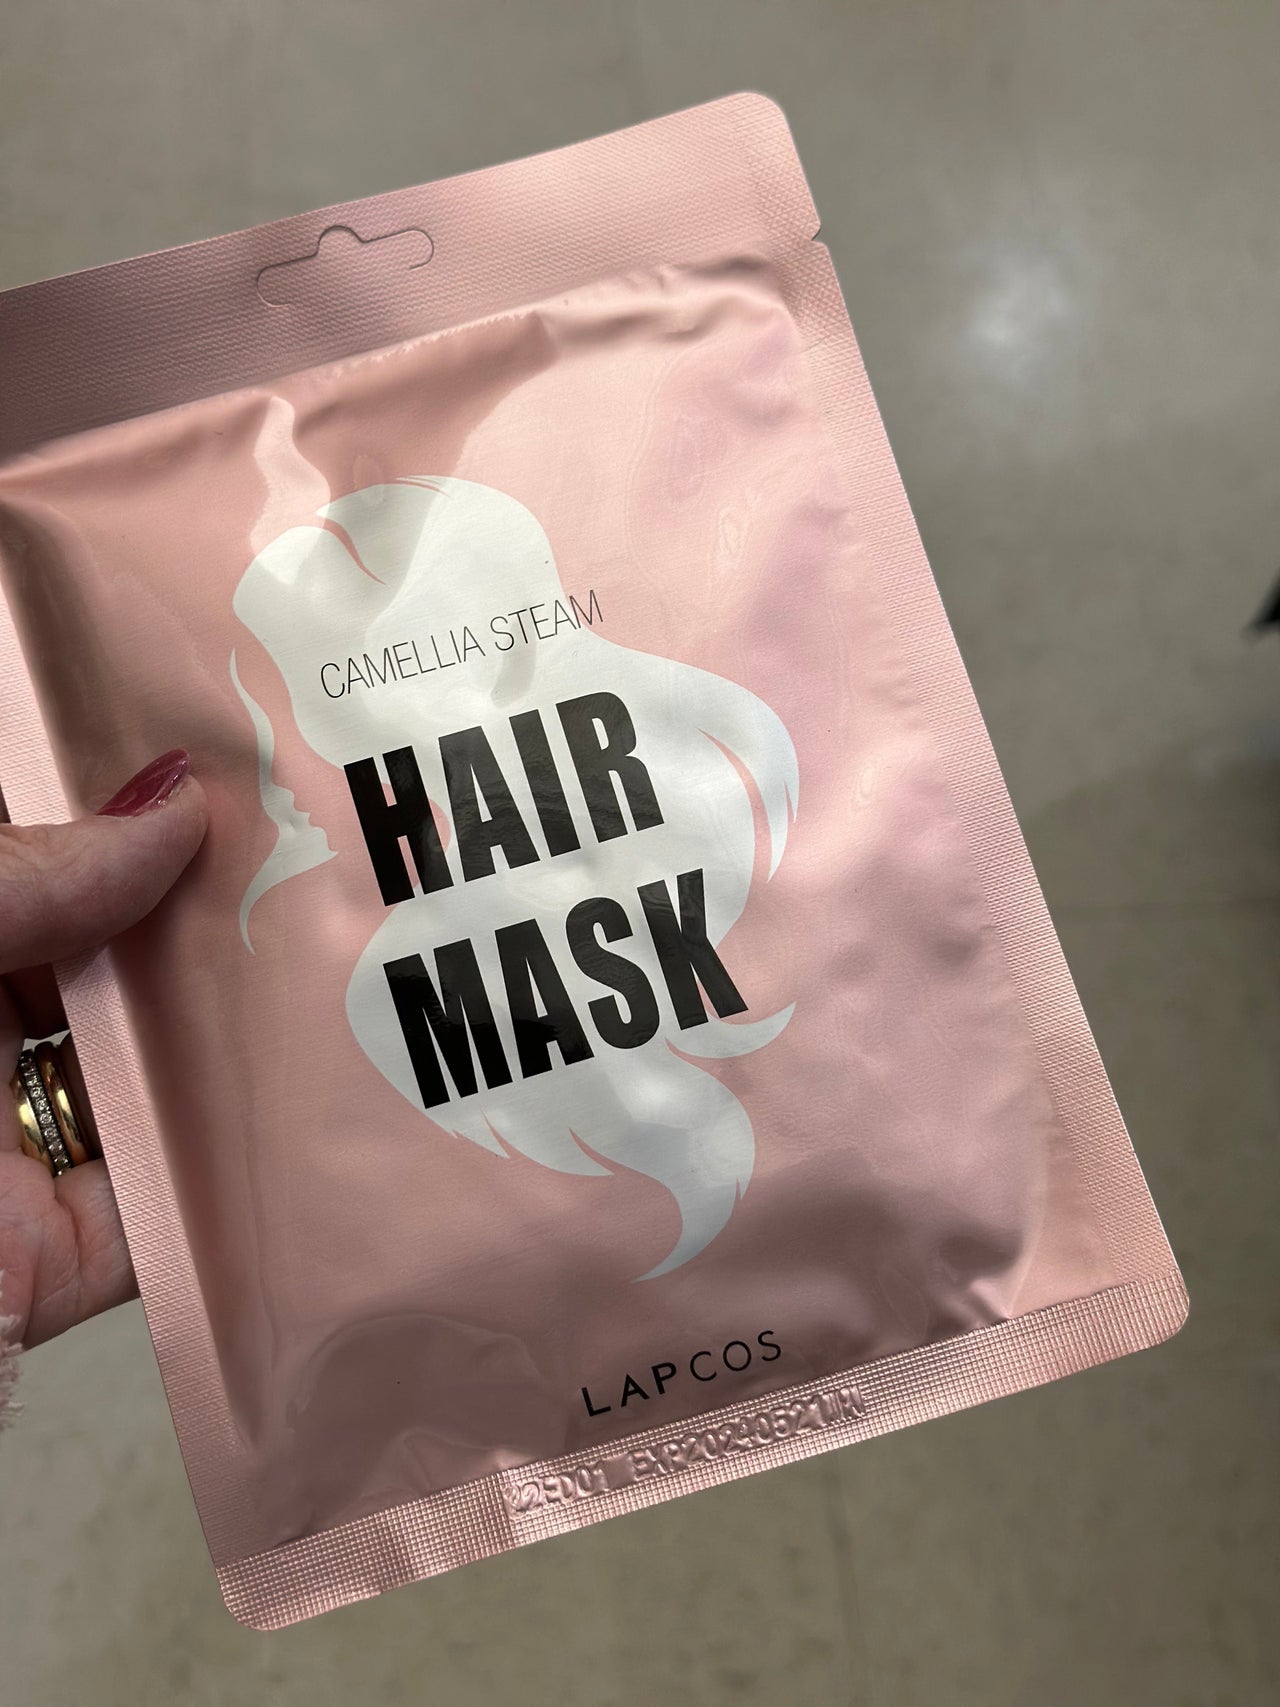 Camellia Steam Hair Mask LAPCOS